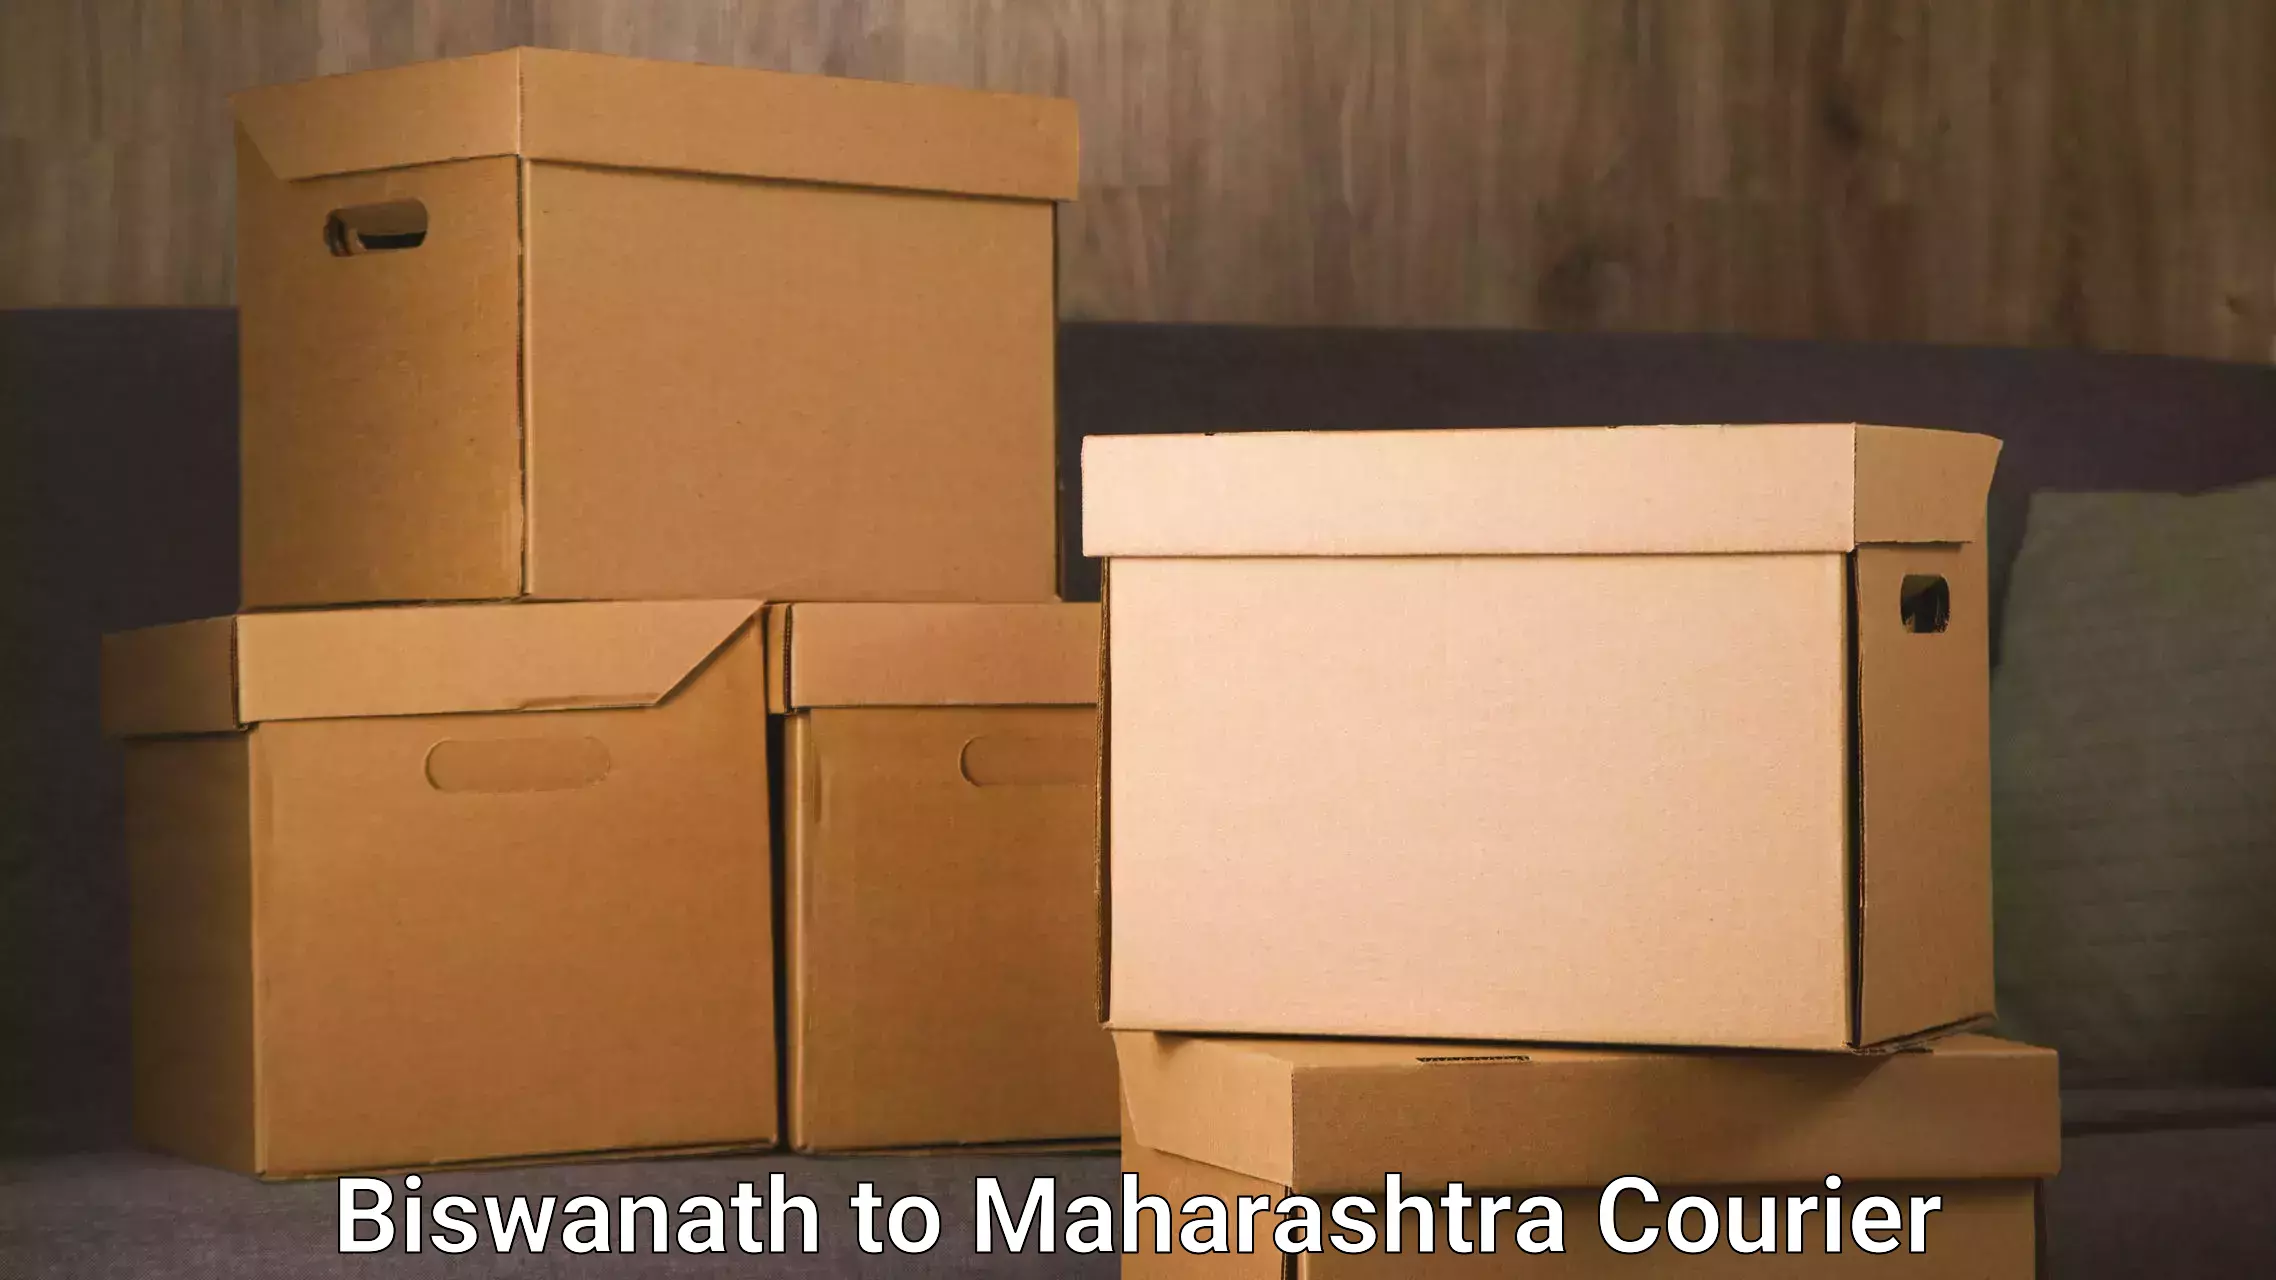 Logistics service provider Biswanath to Maharashtra